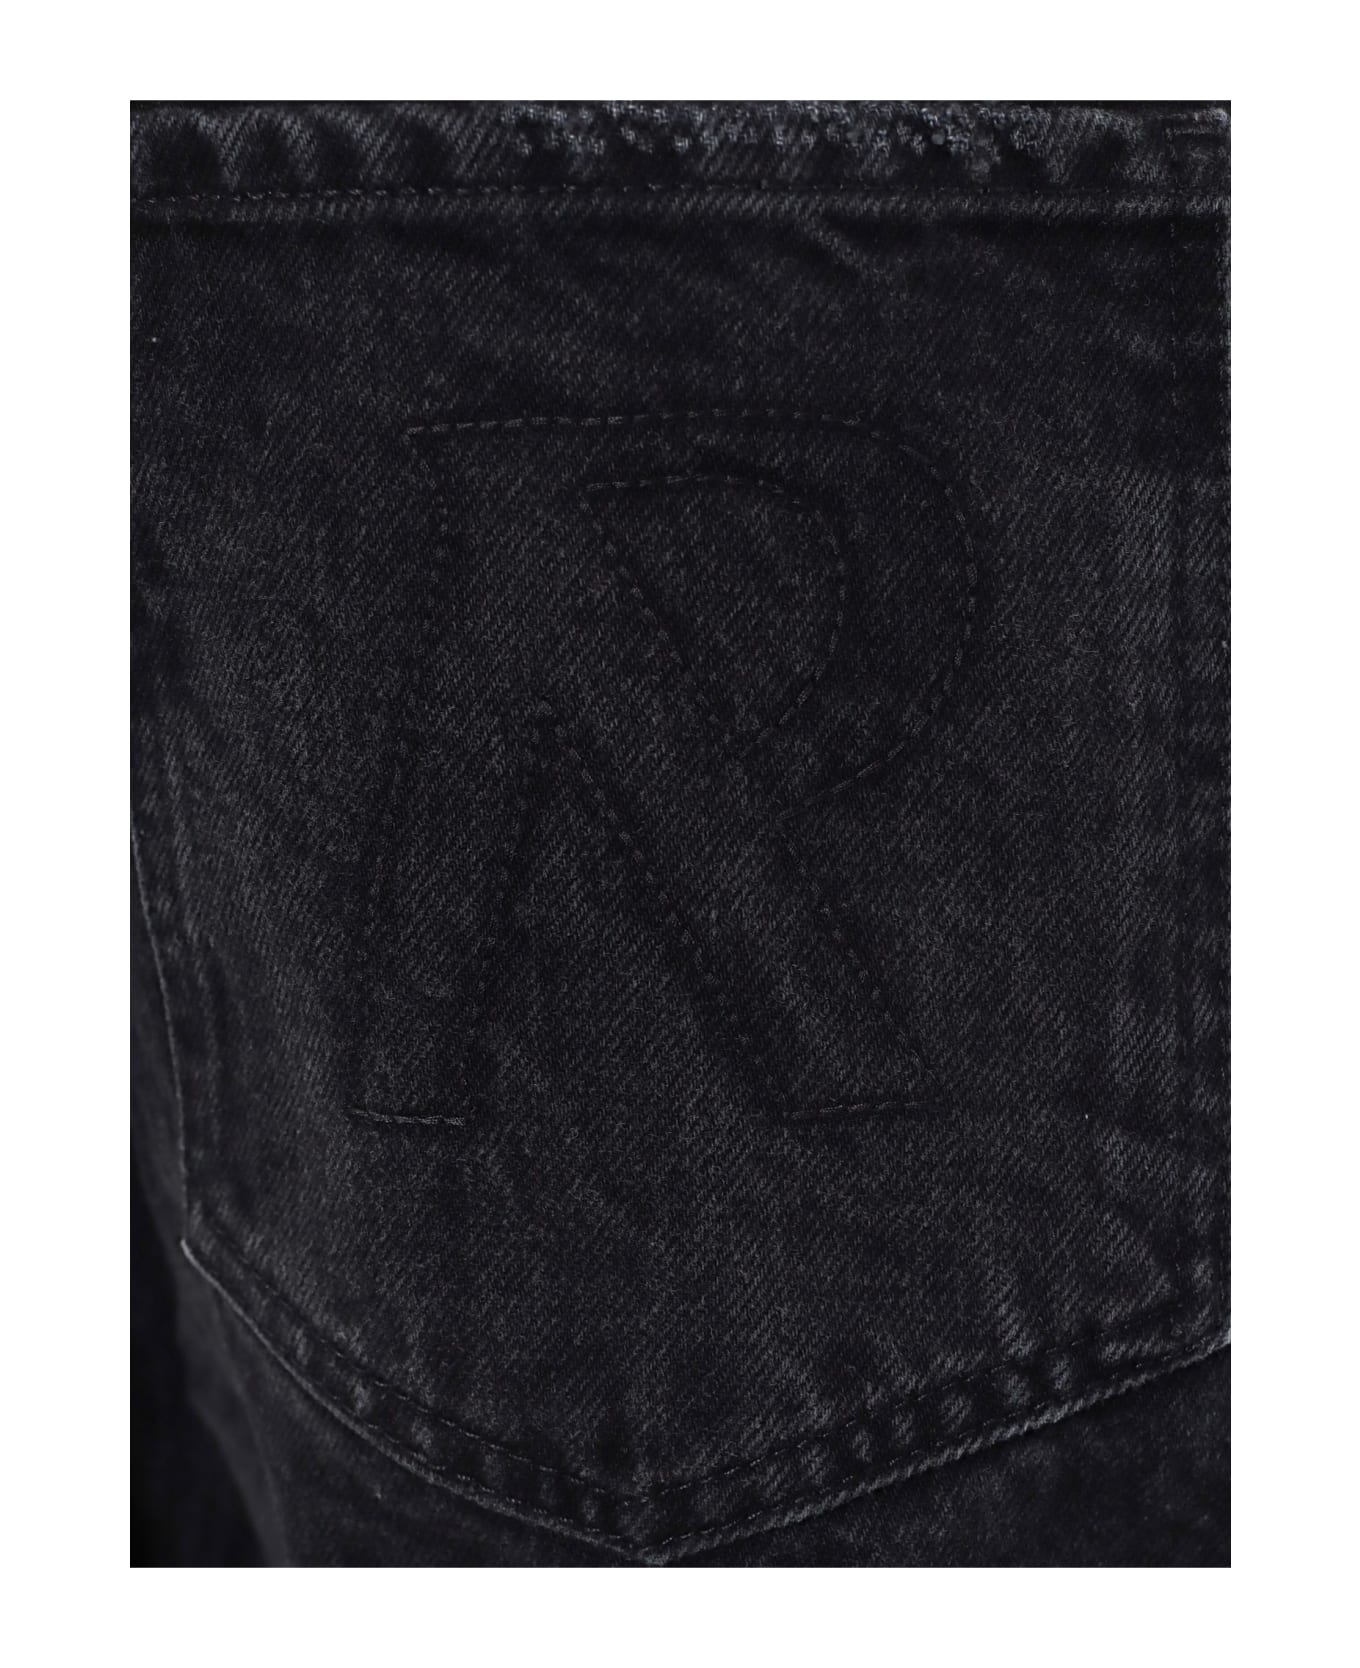 REPRESENT Jeans - Black デニム